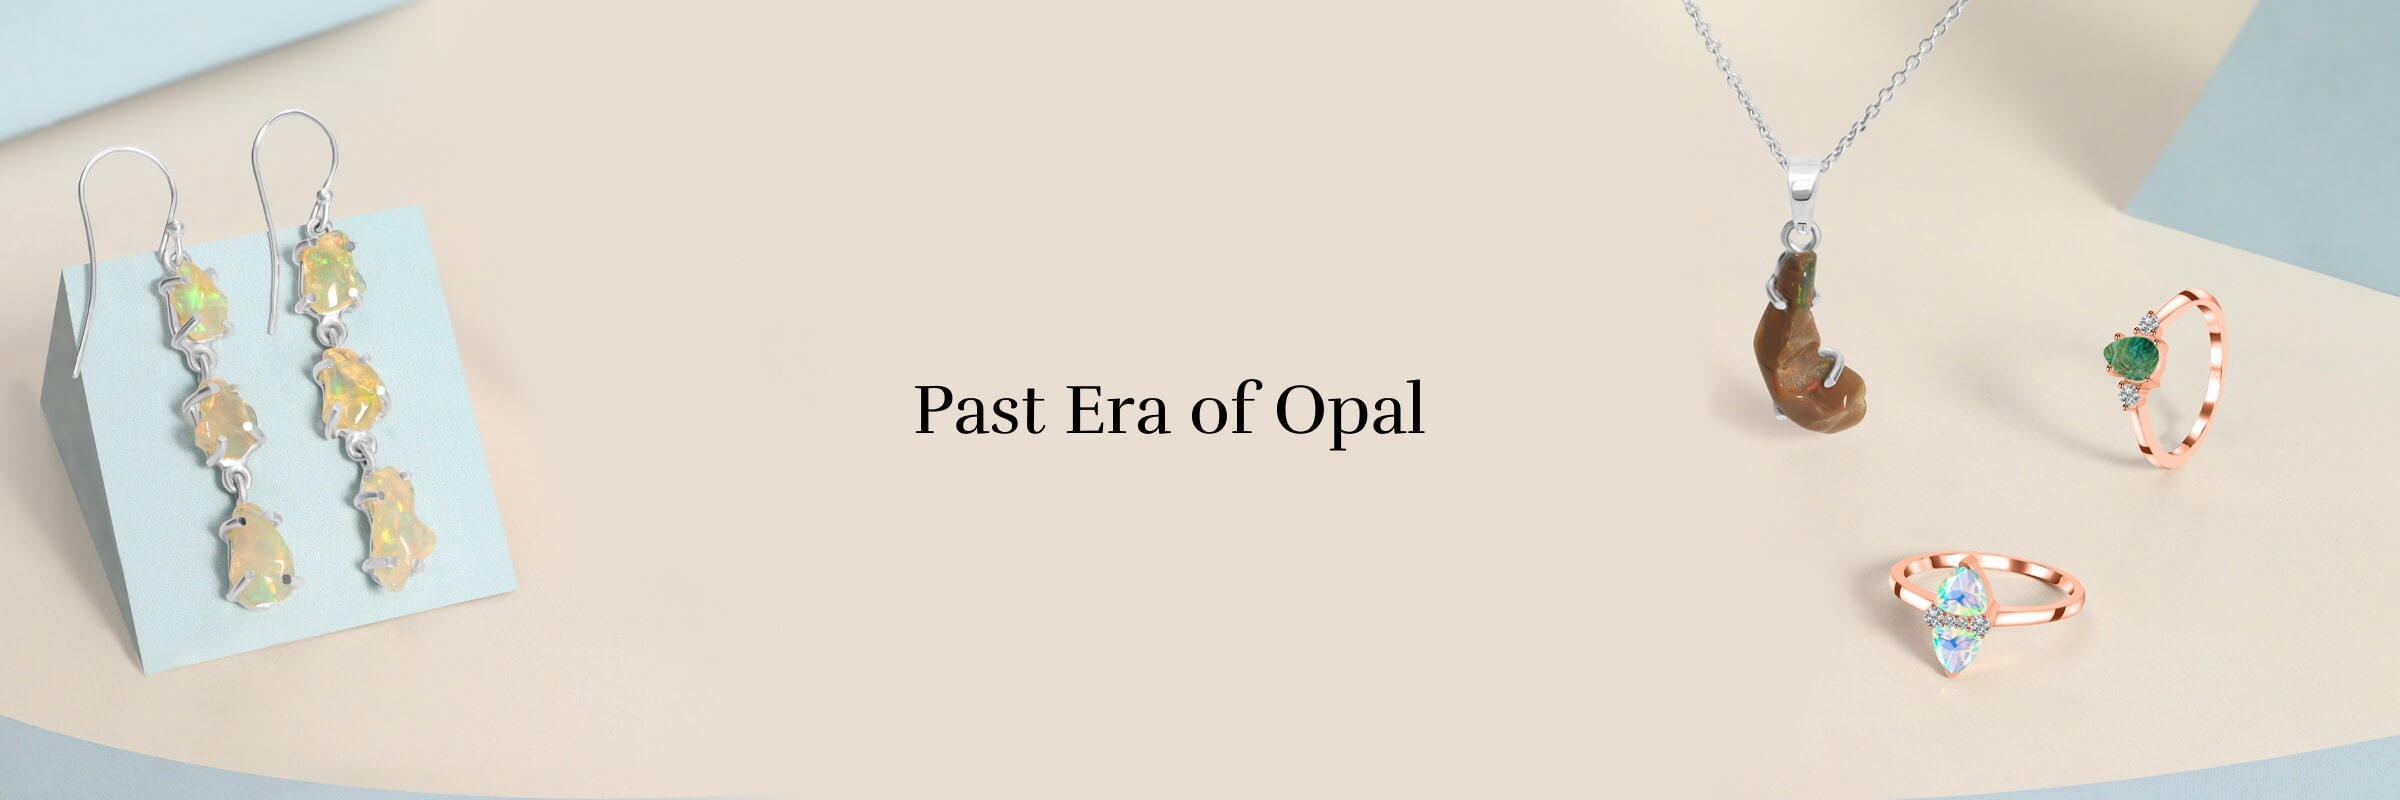 History of opal